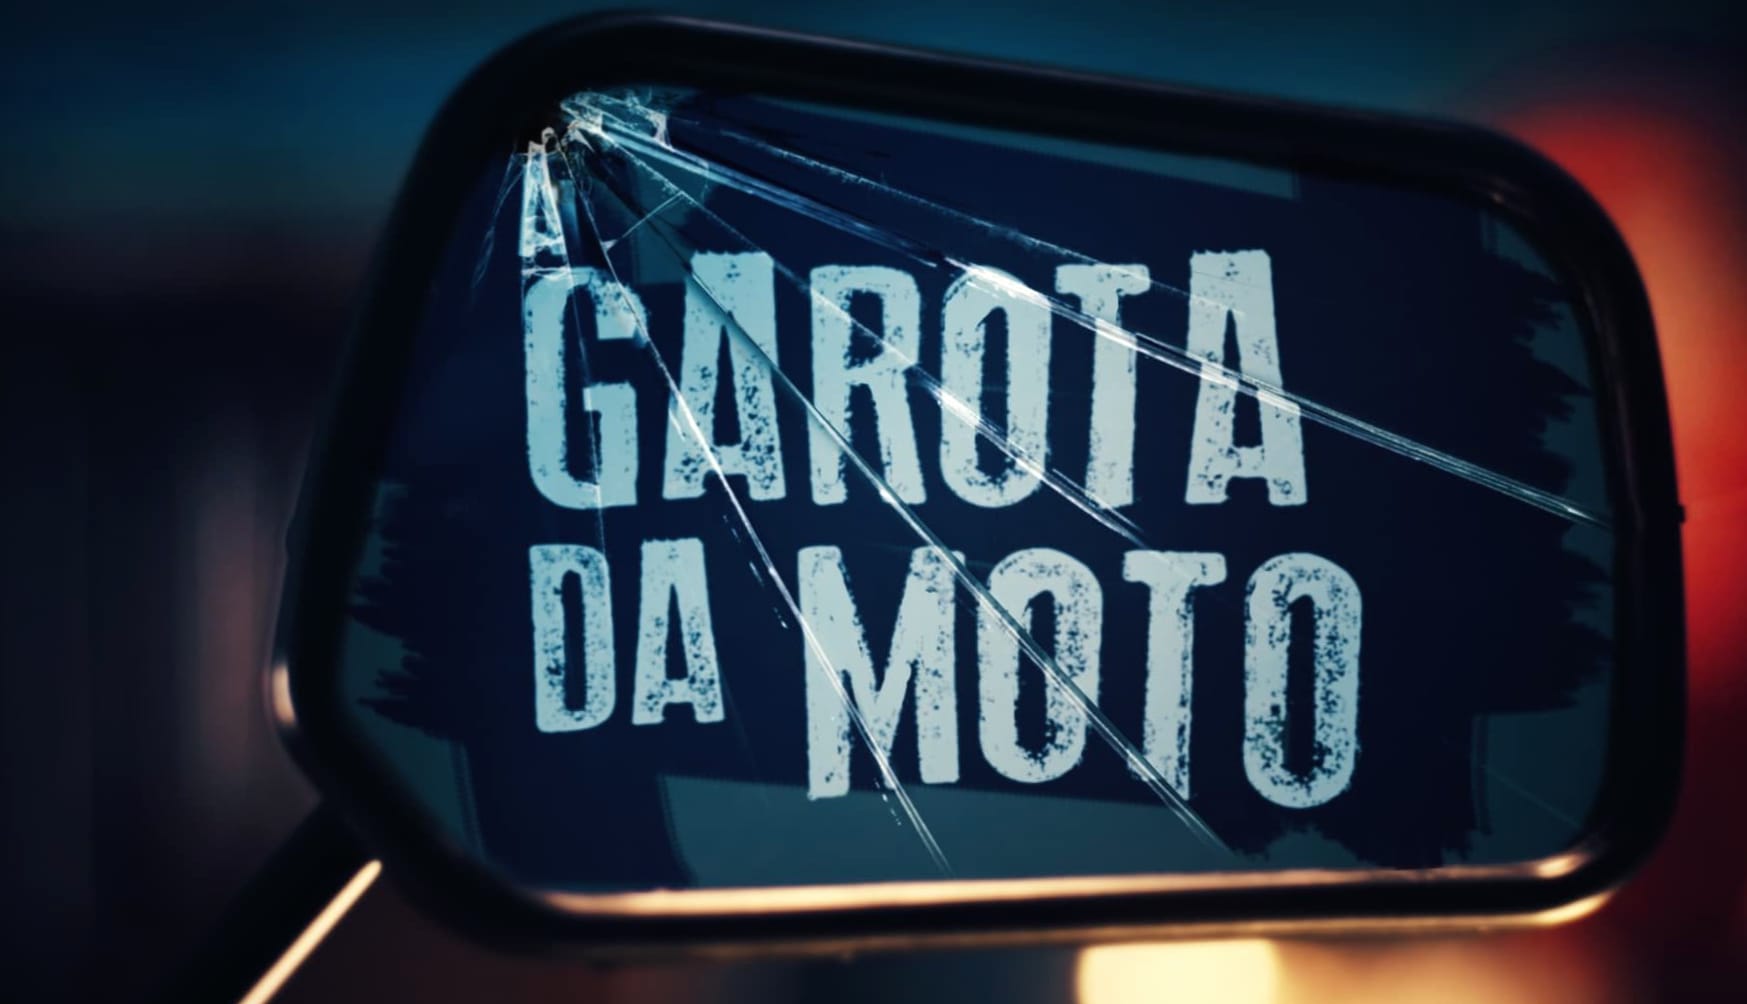 A Garota da Moto at 1152 x 864 size wallpapers HD quality